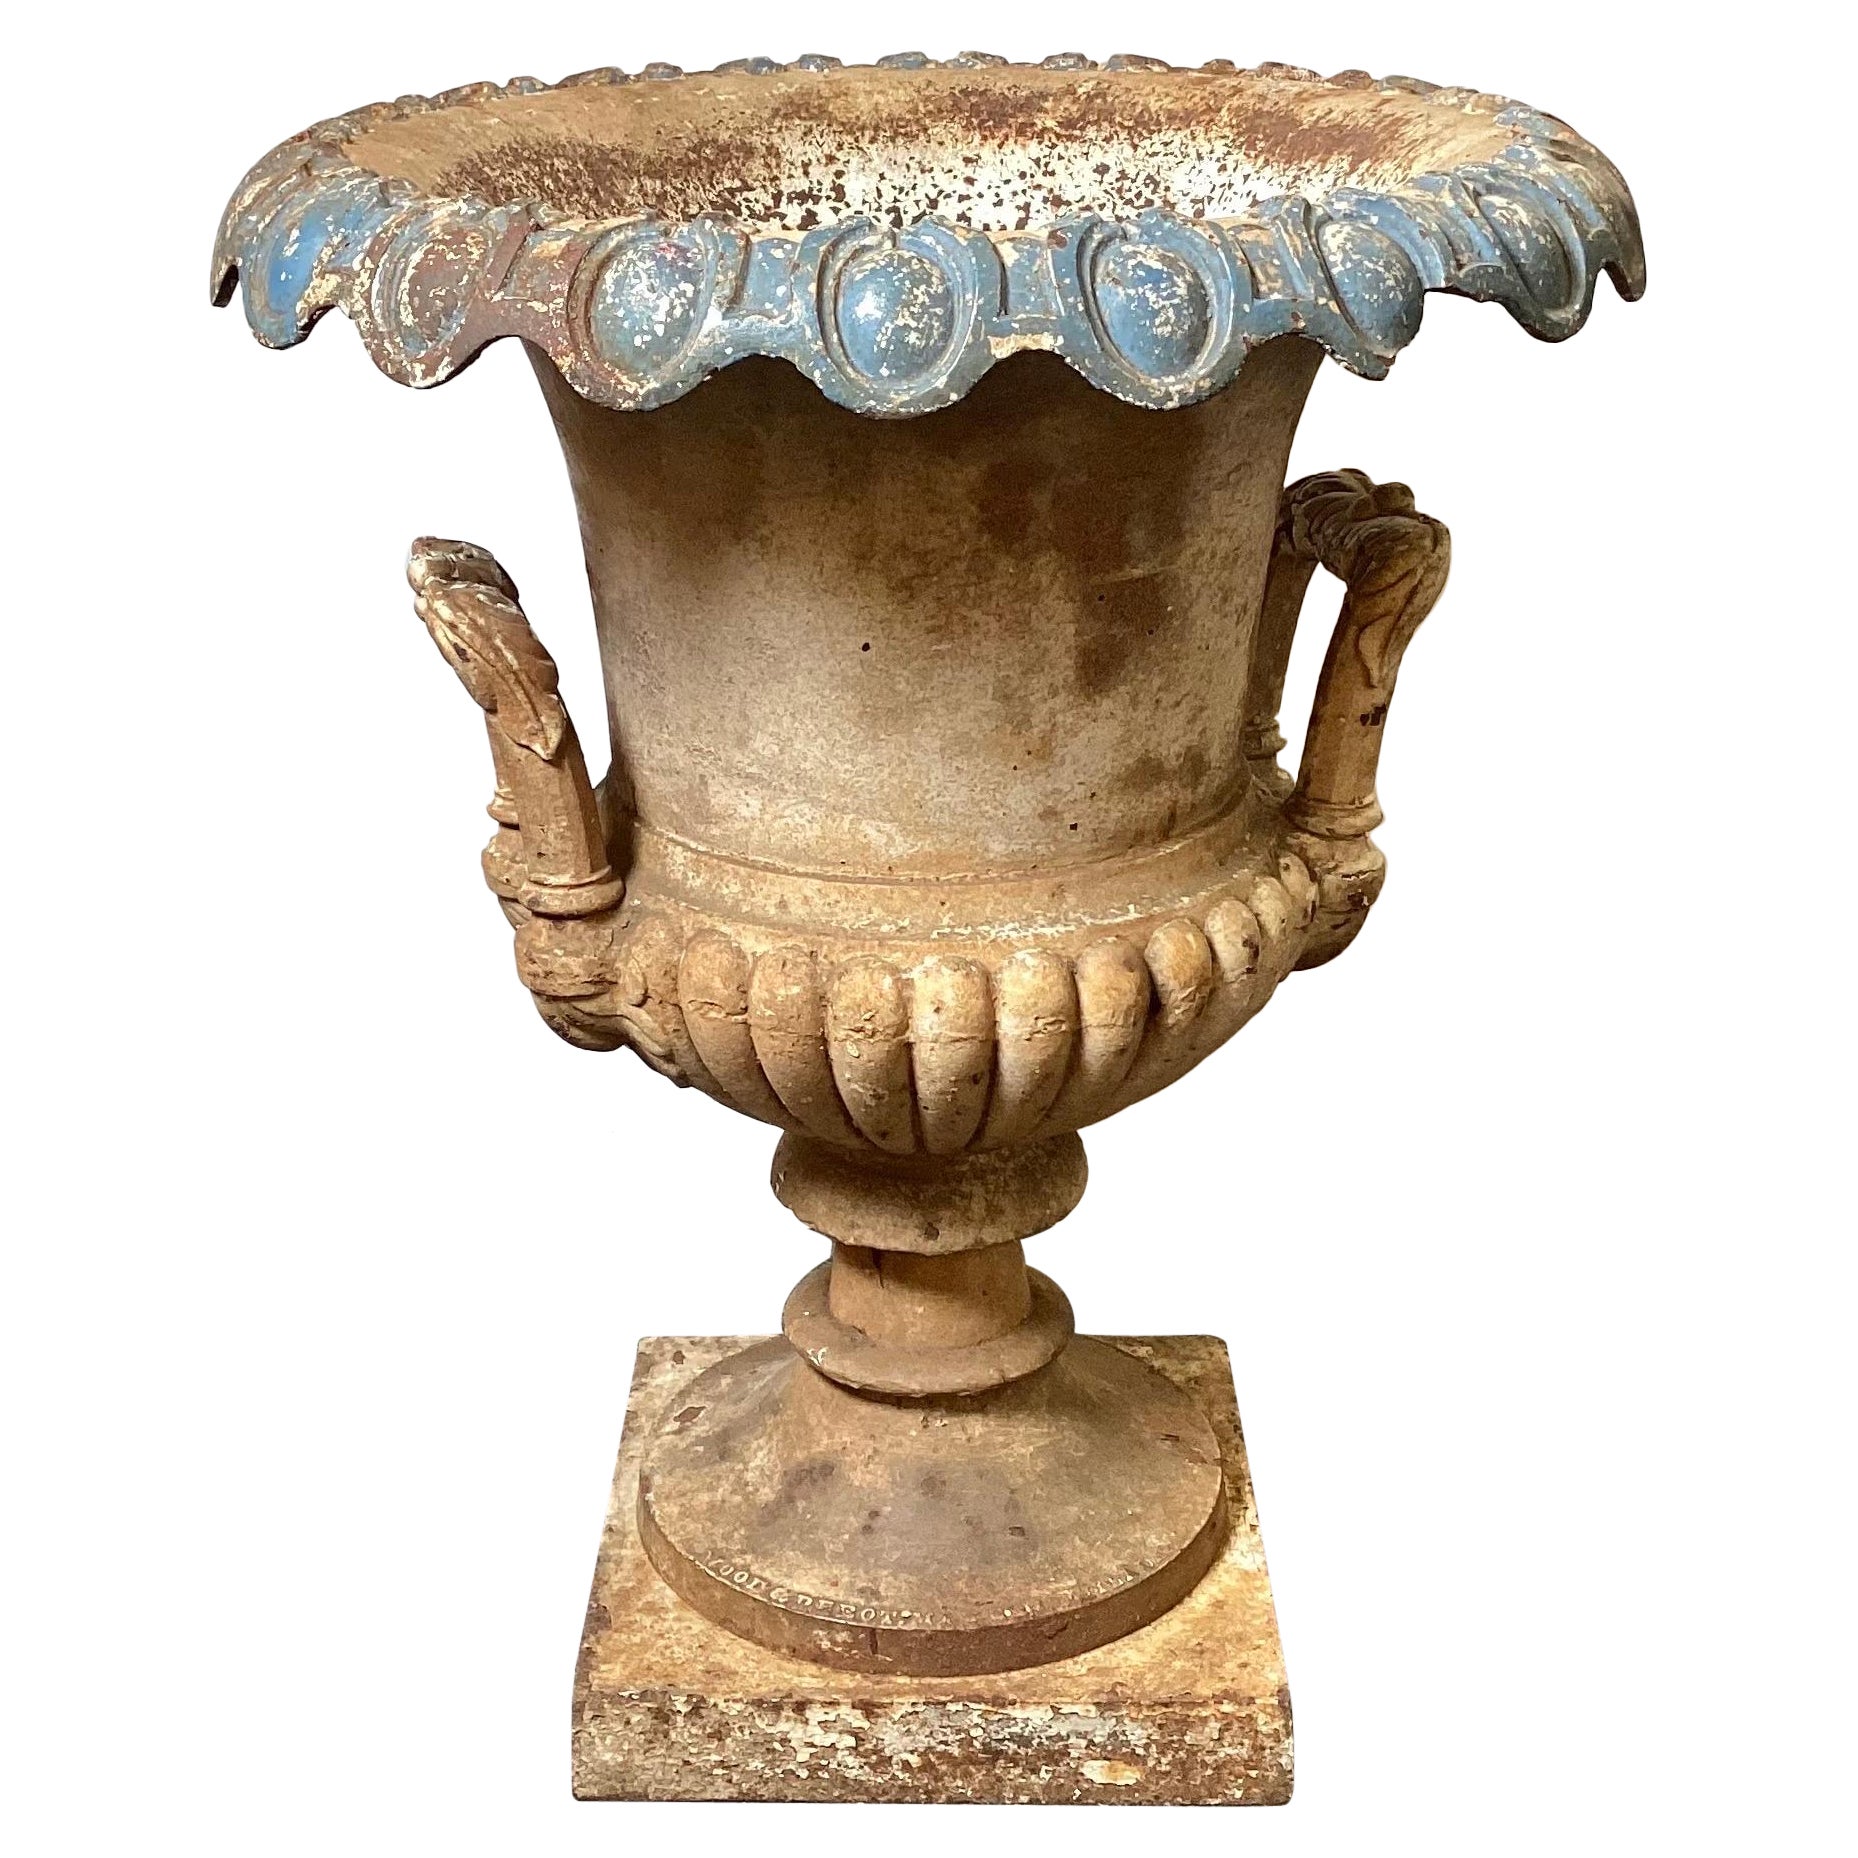 Large Cast Iron Campana Garden Urn, circa 1860